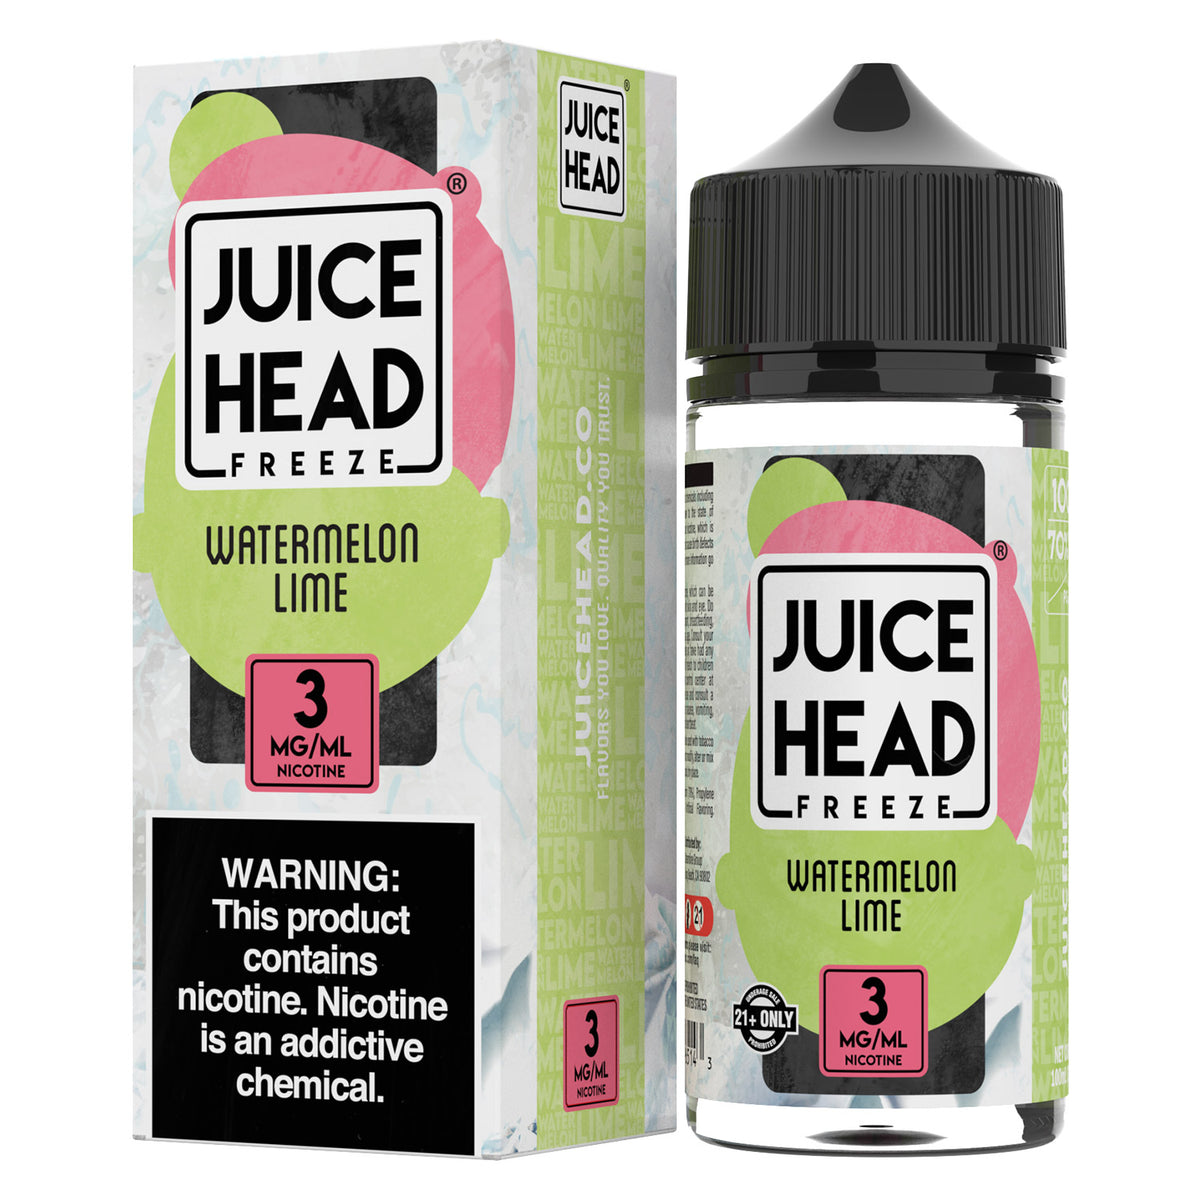 Juice Head 100mL Watermelon Lime Freeze